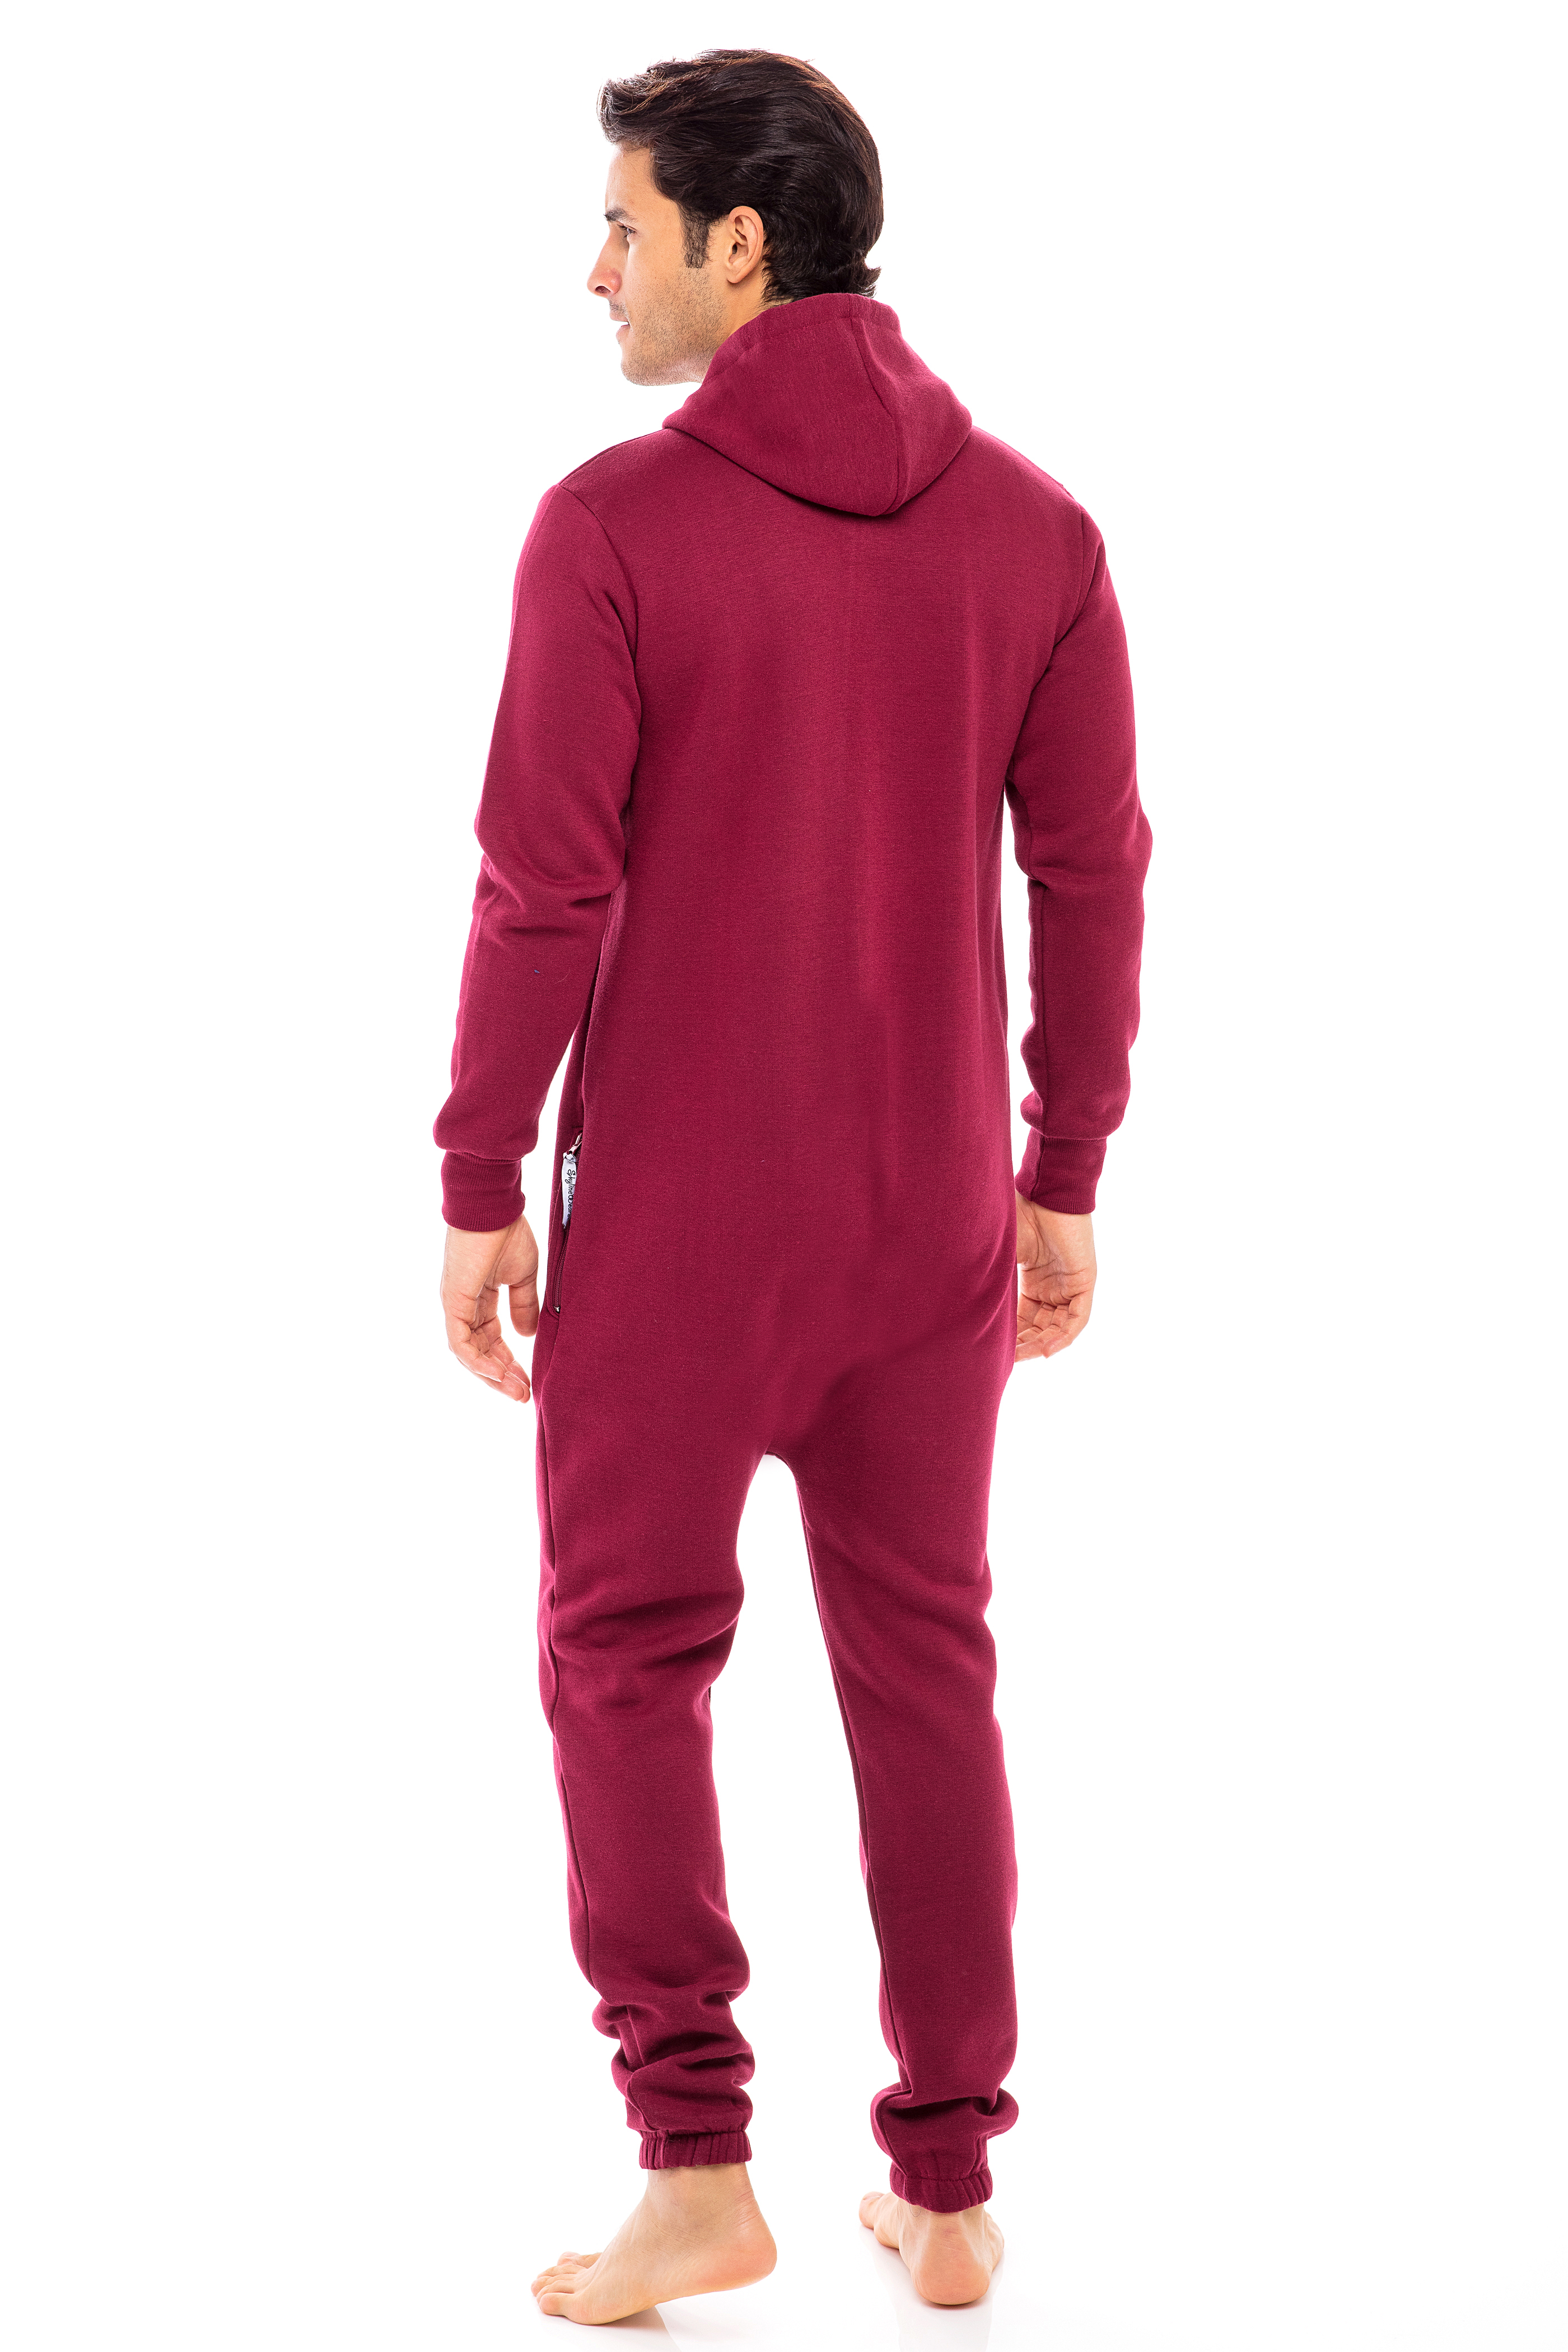 Sleepyheads Men's Non-Footed Onesie Pajamas Jumpsuit